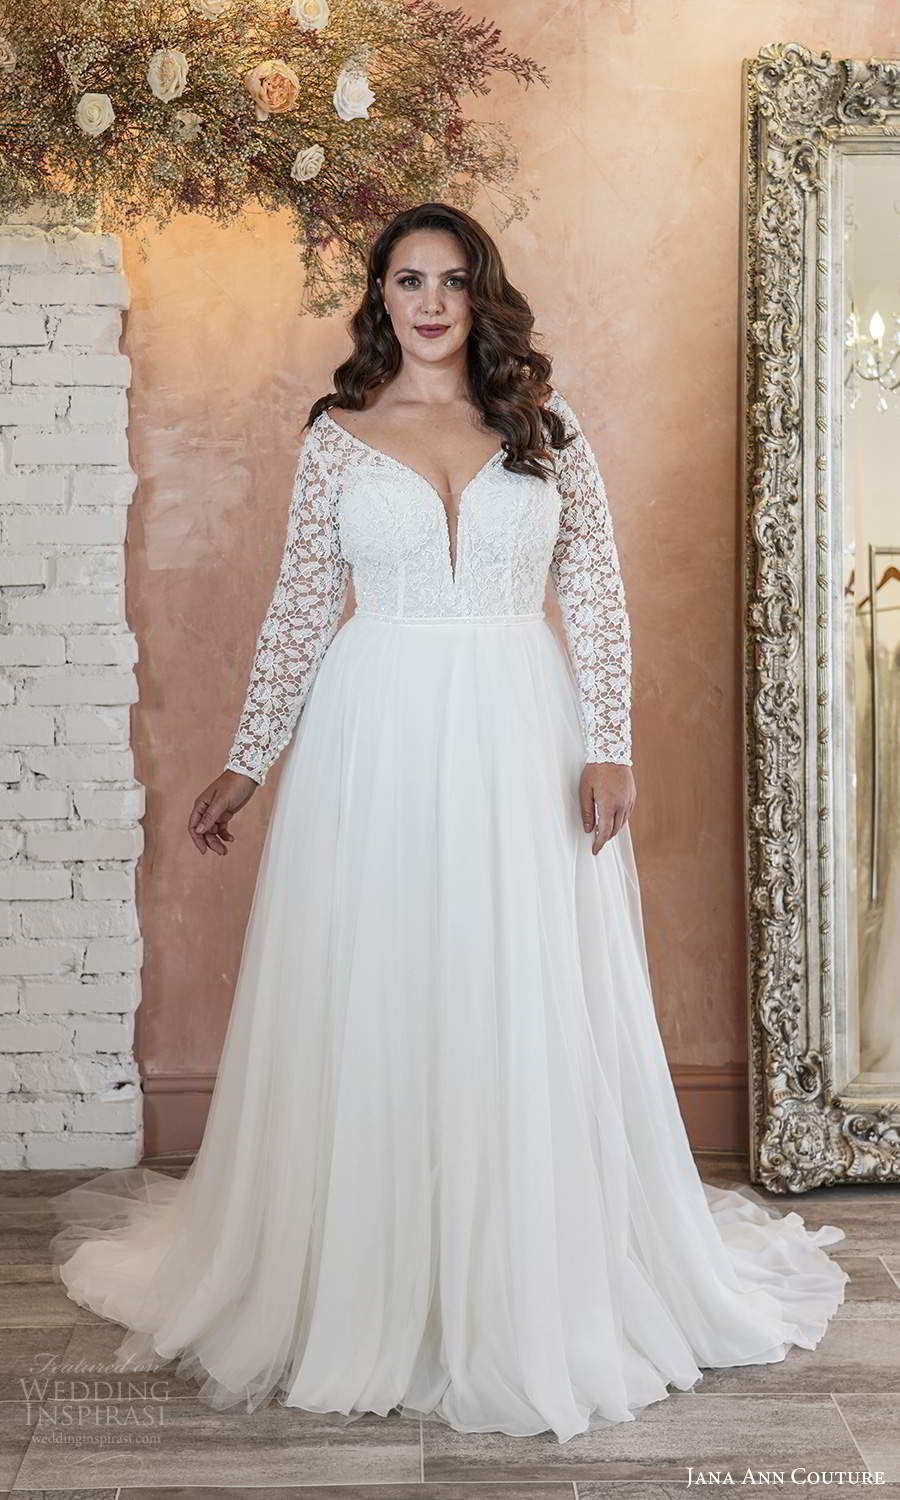 jana ann couture 2021 bridal long sleeves off shoulder neckline embellished bodice a line ball gown wedding dress chapel train (27) mv